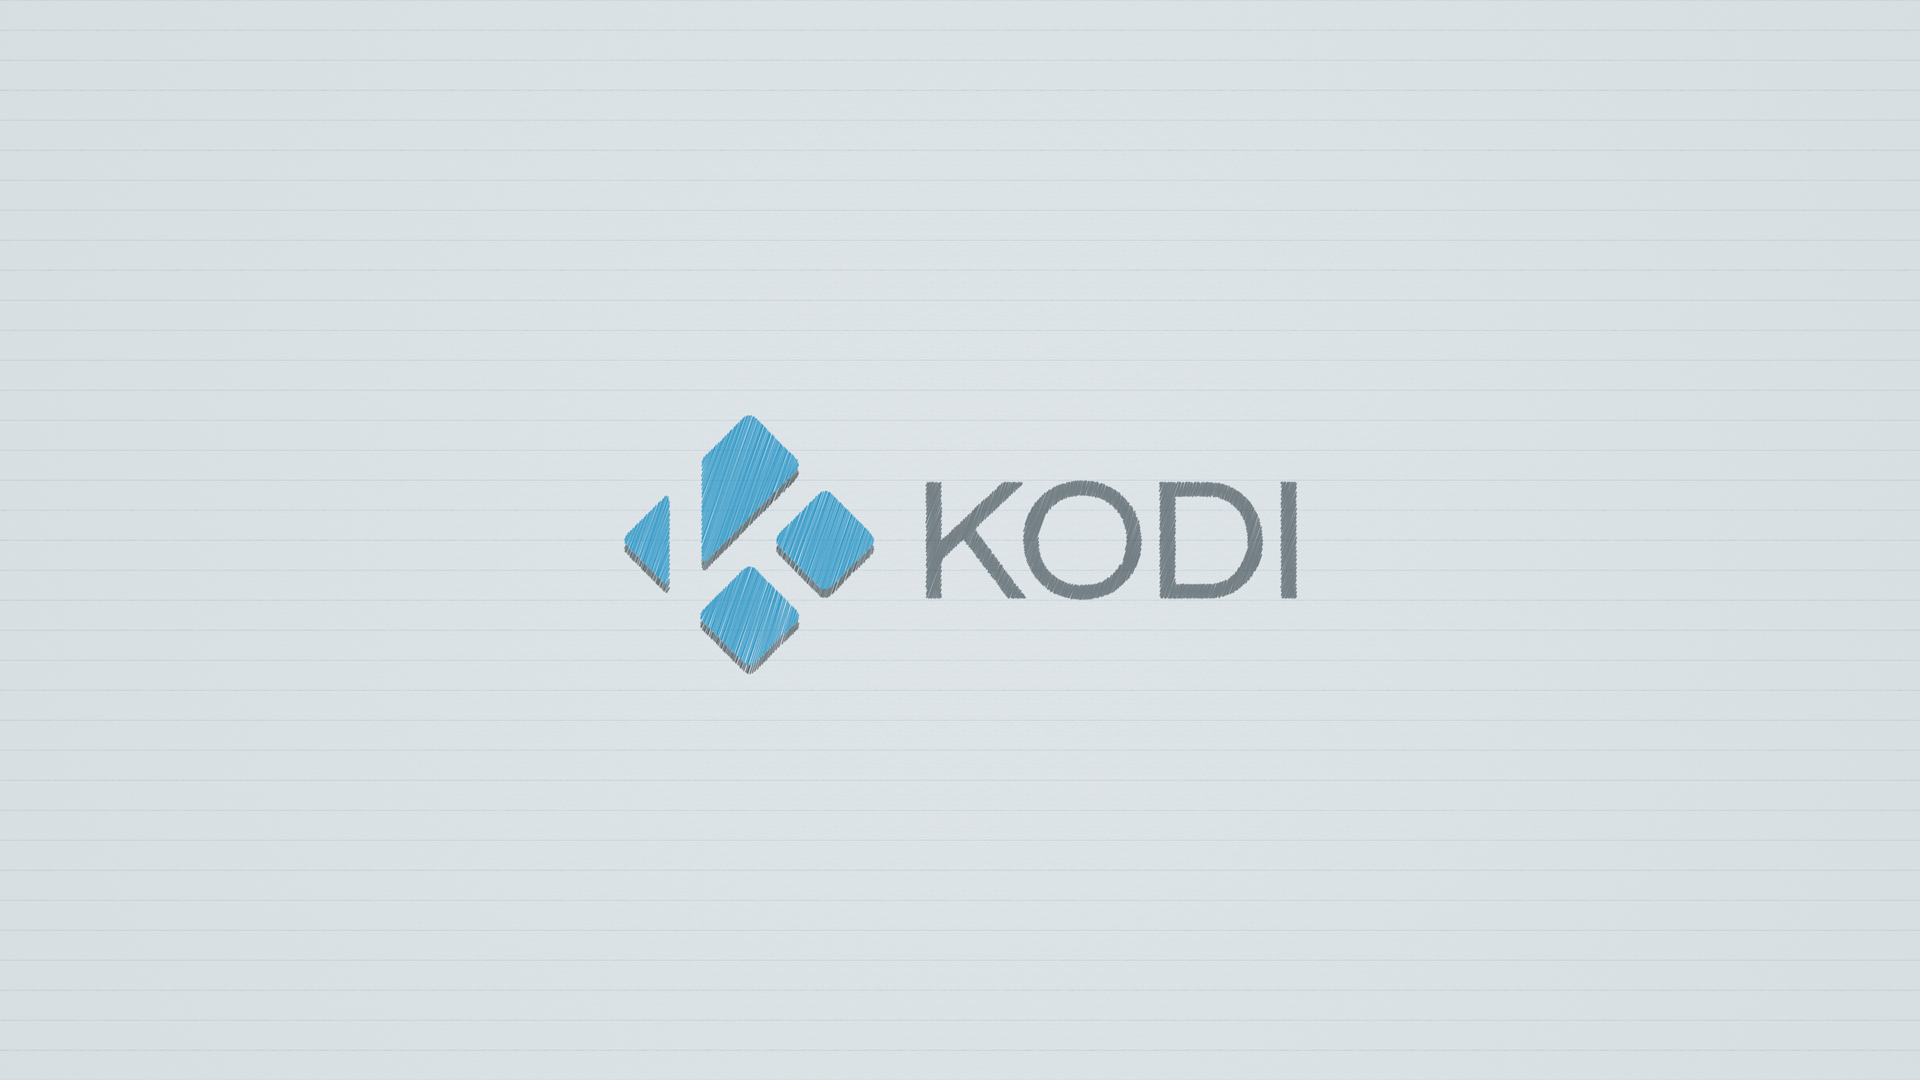 Kodi-Wallpaper-8B-1080p samfisher.jpg